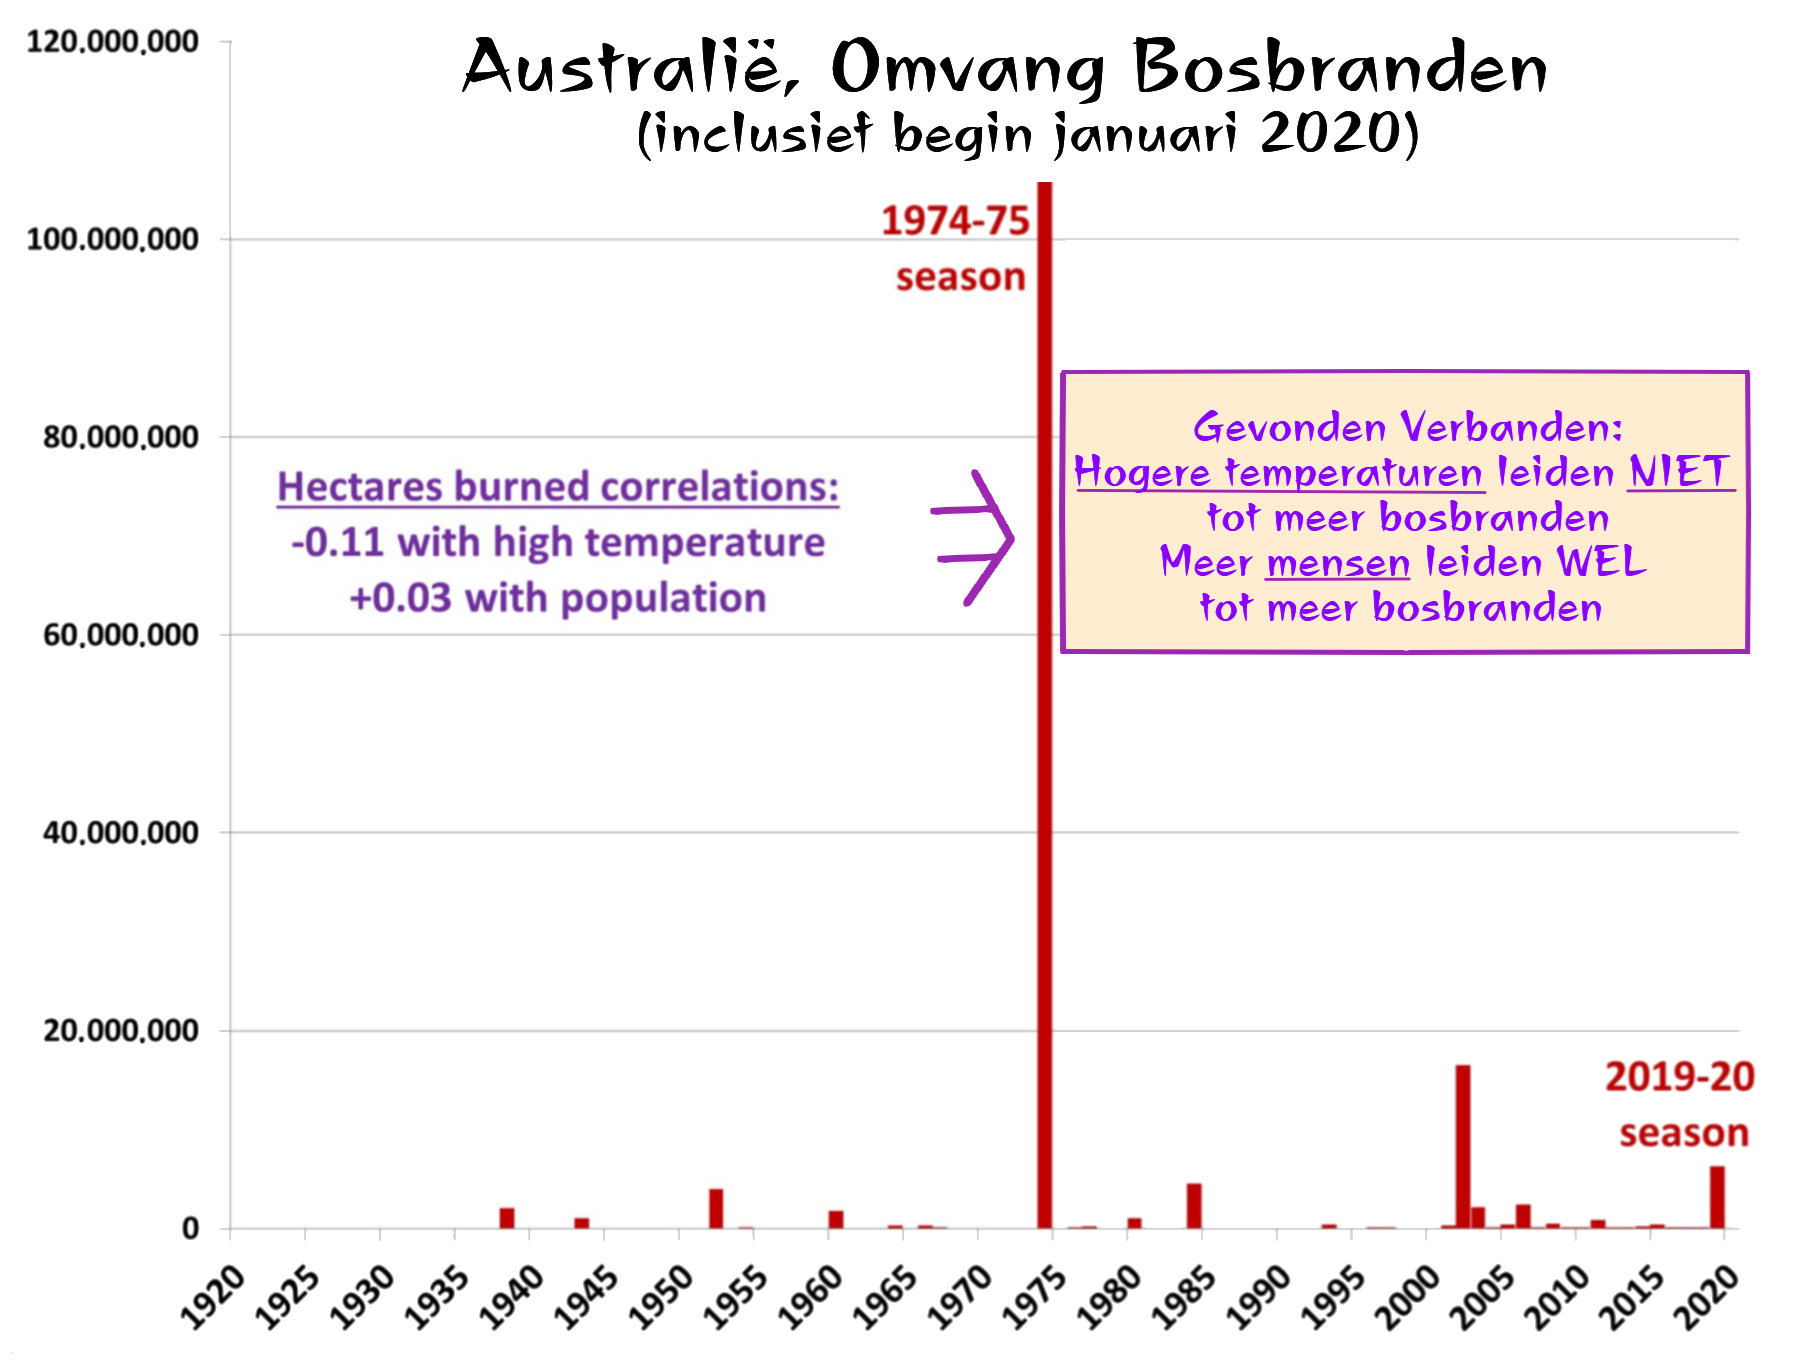 grafiek australie bosbranden hectares 1920-2020